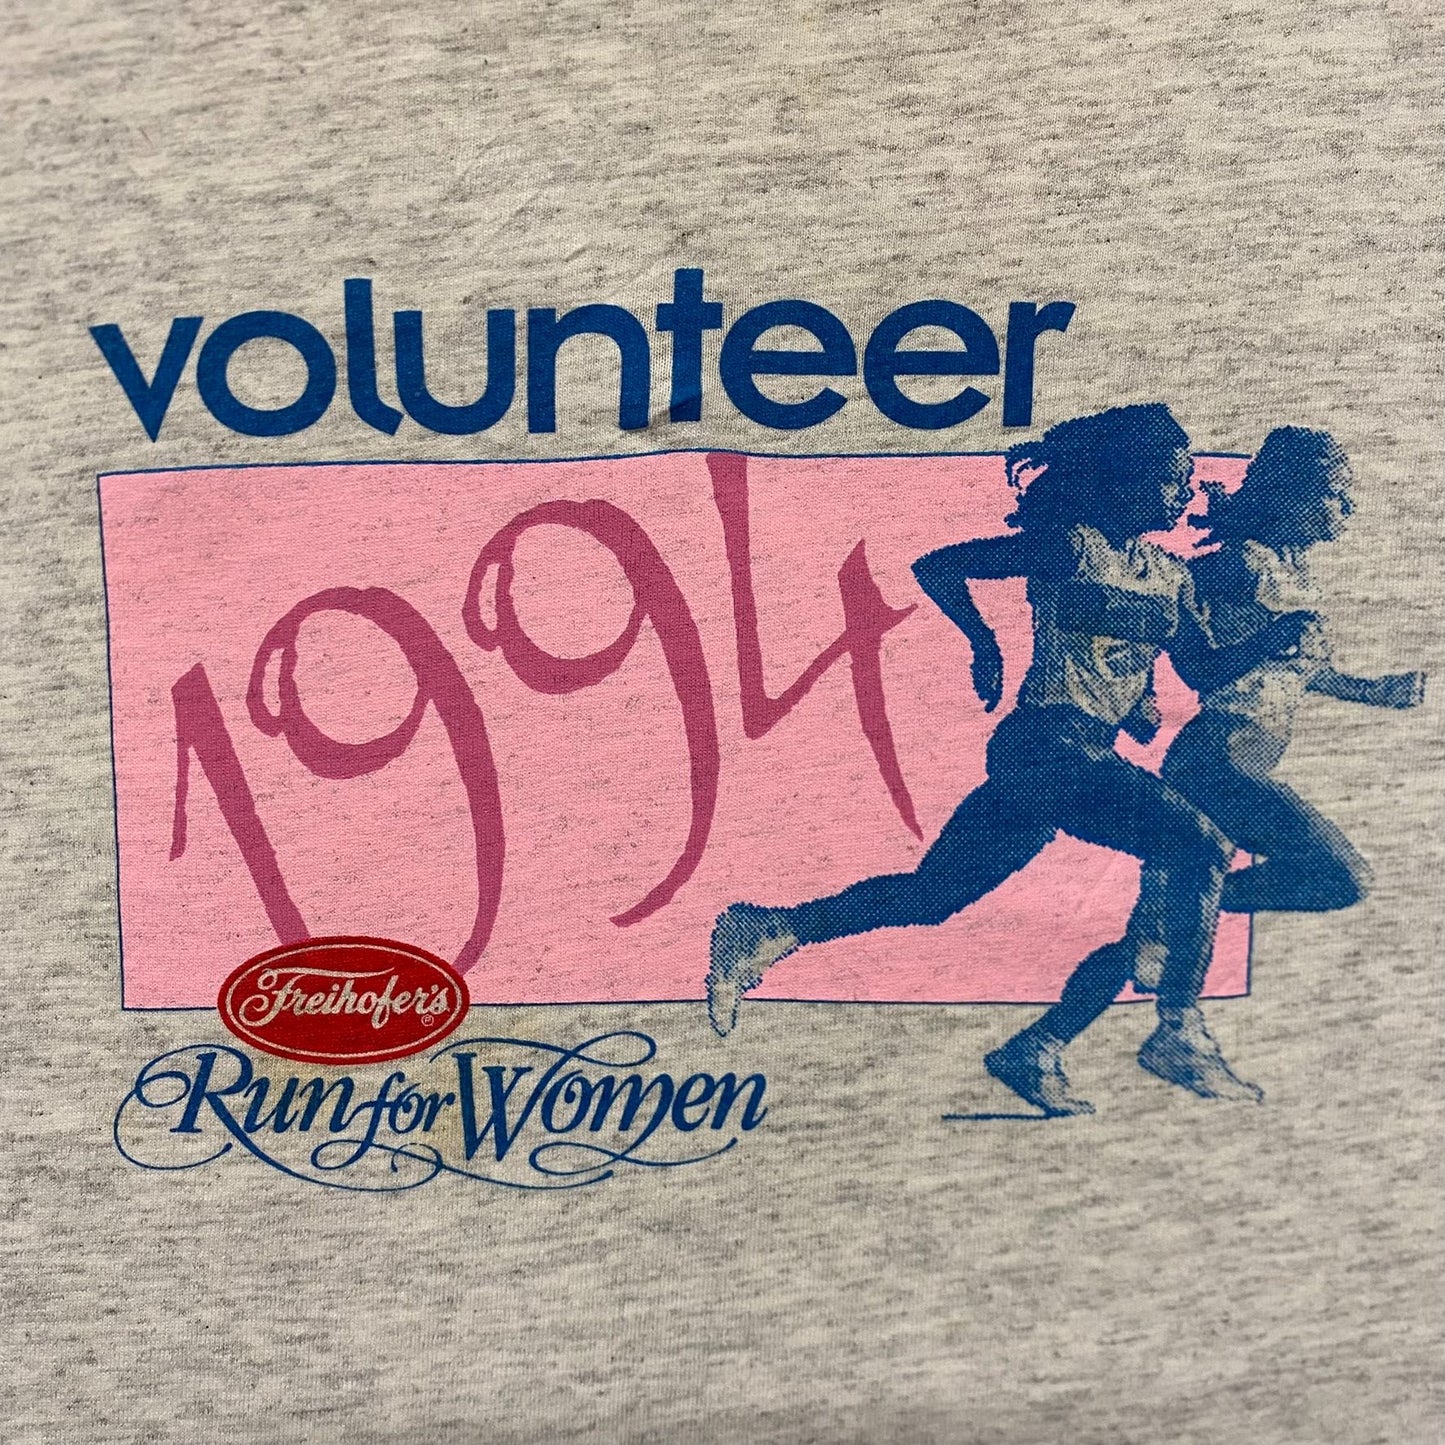 Vintage 90s Essential Nike Running Single Stitch T-Shirt